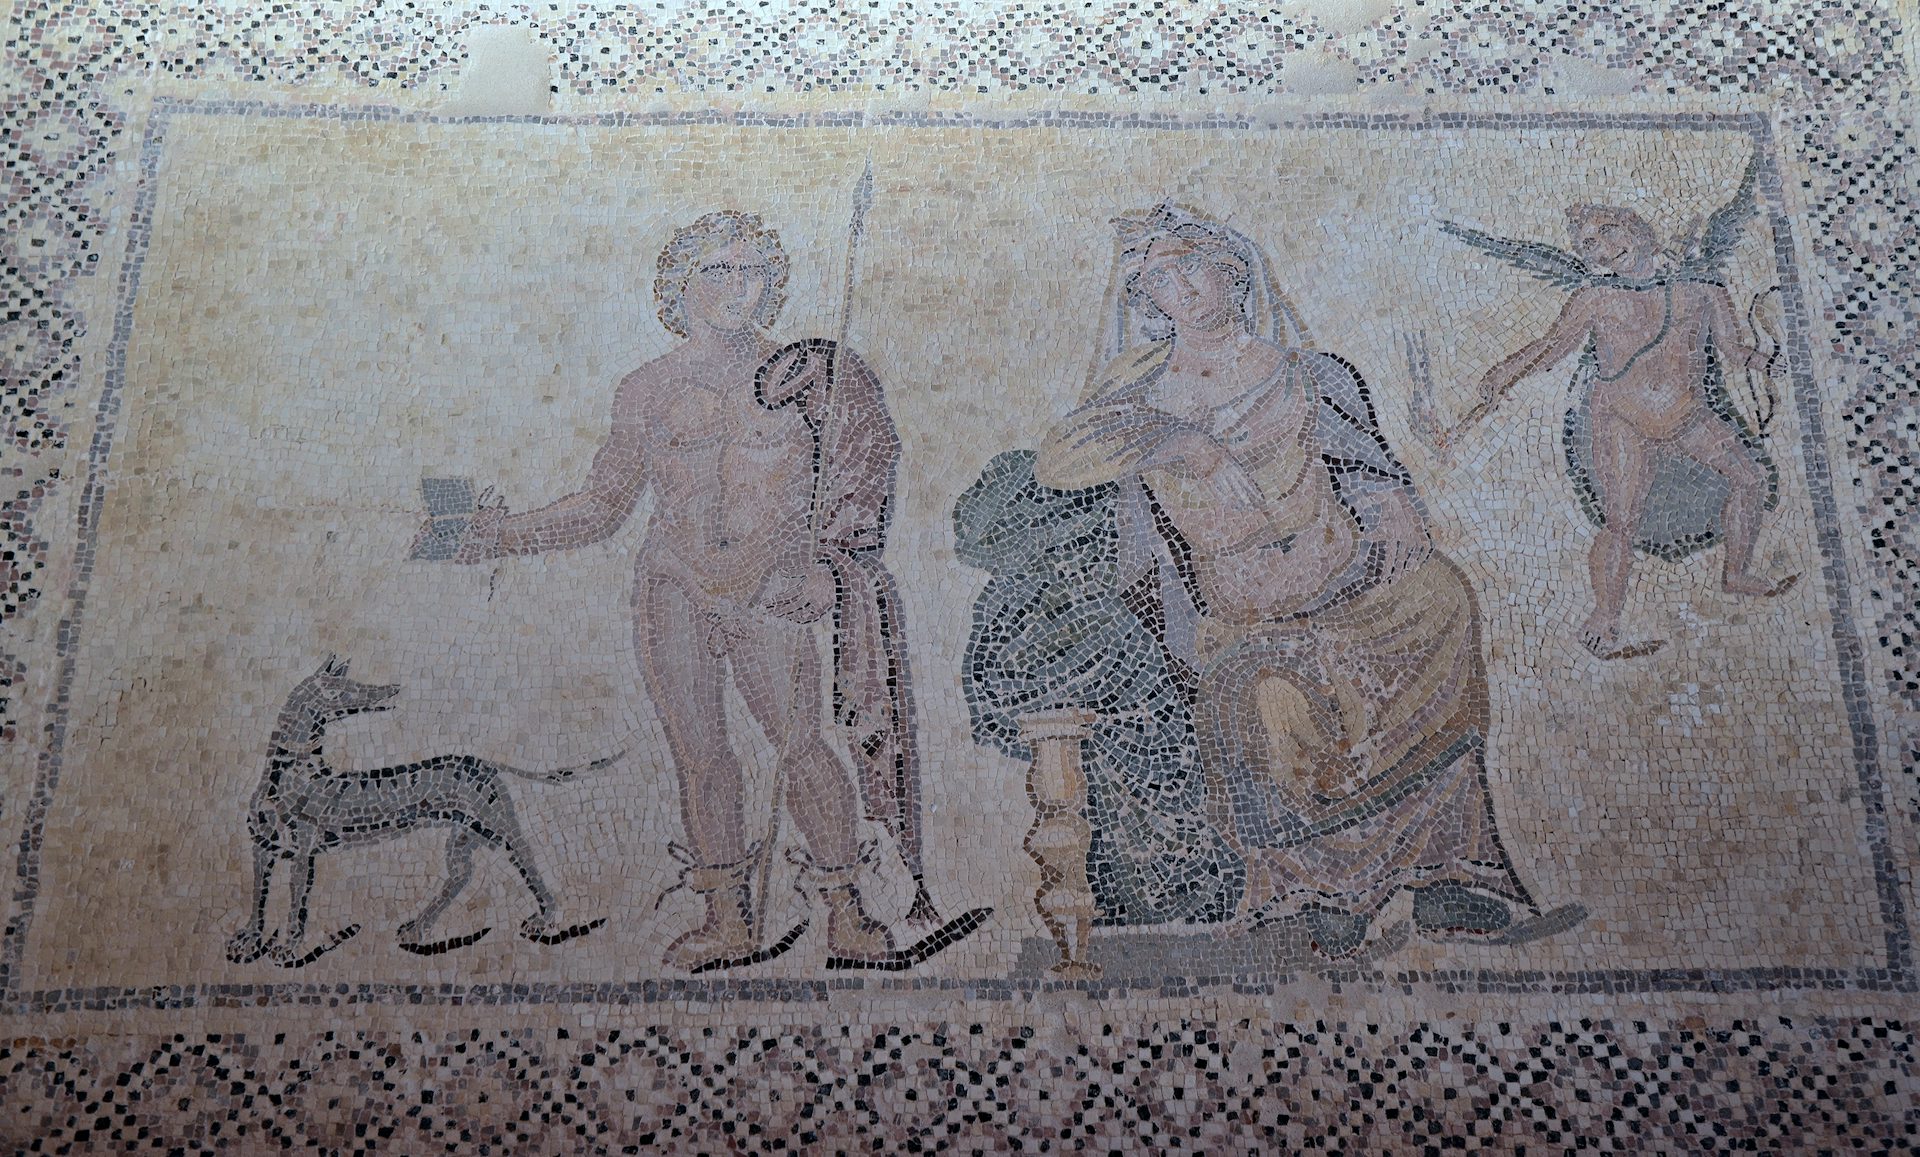 Mosaic showing Phaedra and Hippolytus, circa 3rd century ce